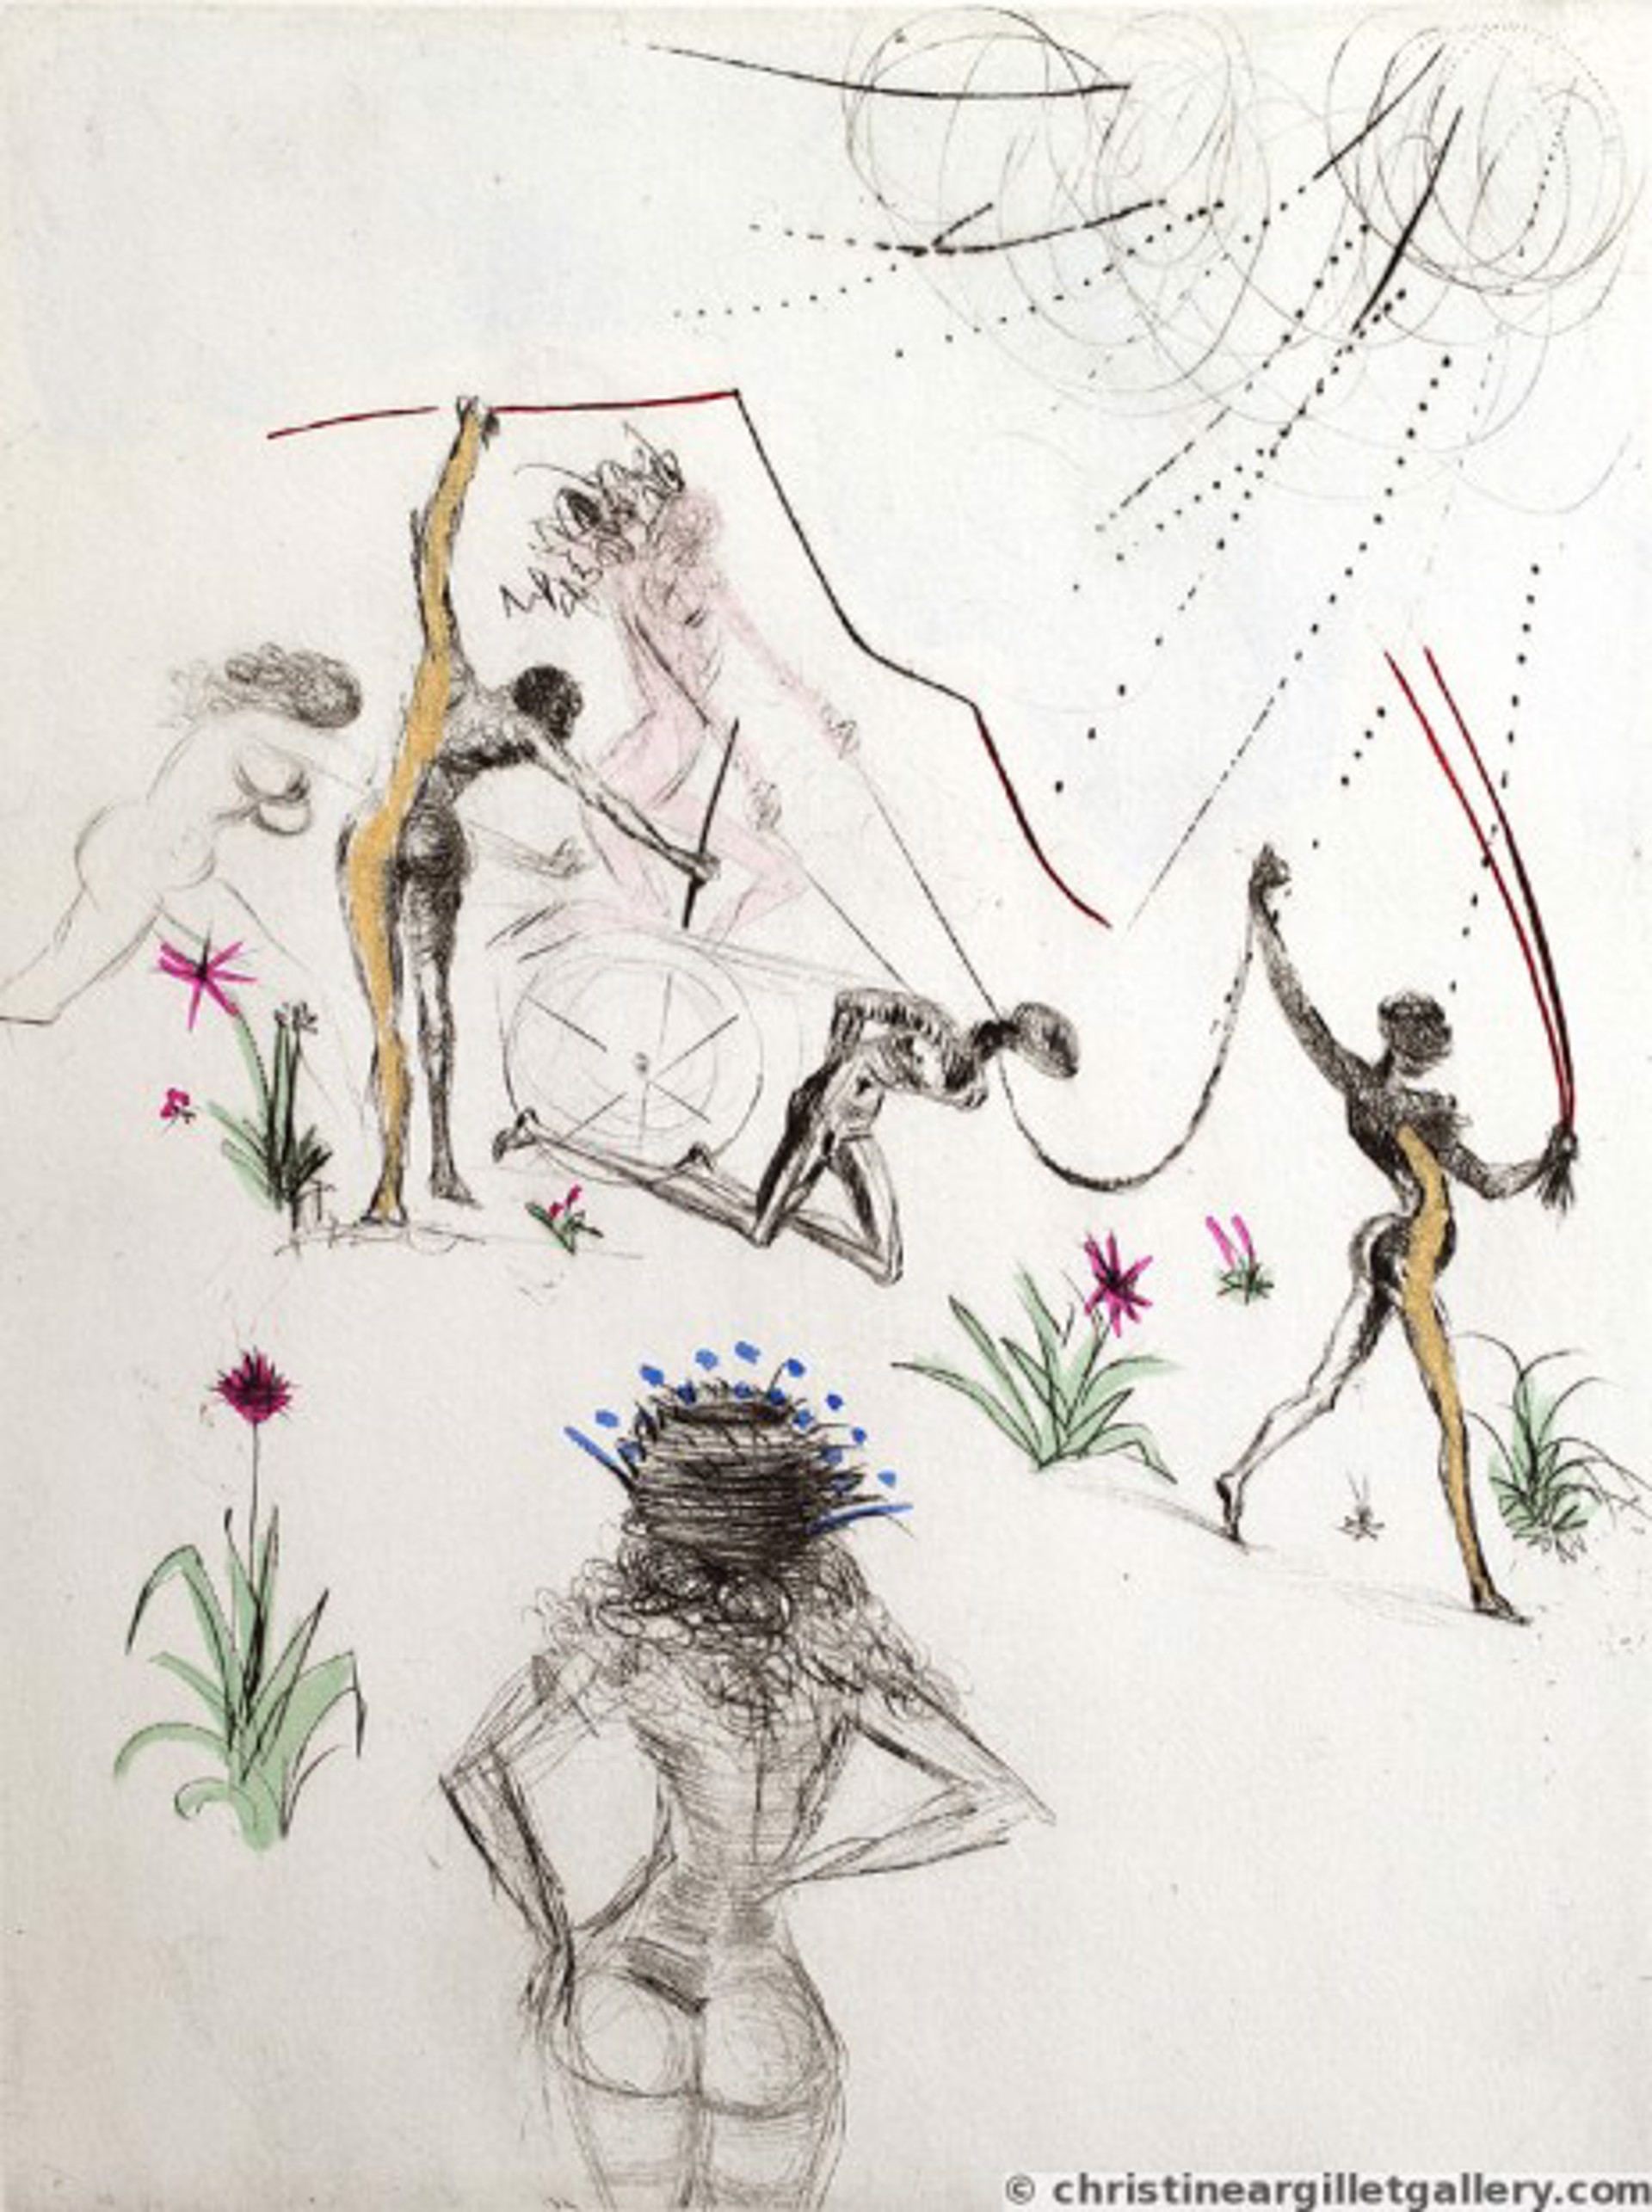 Venus in Furs  "Negresses" by Salvador Dali